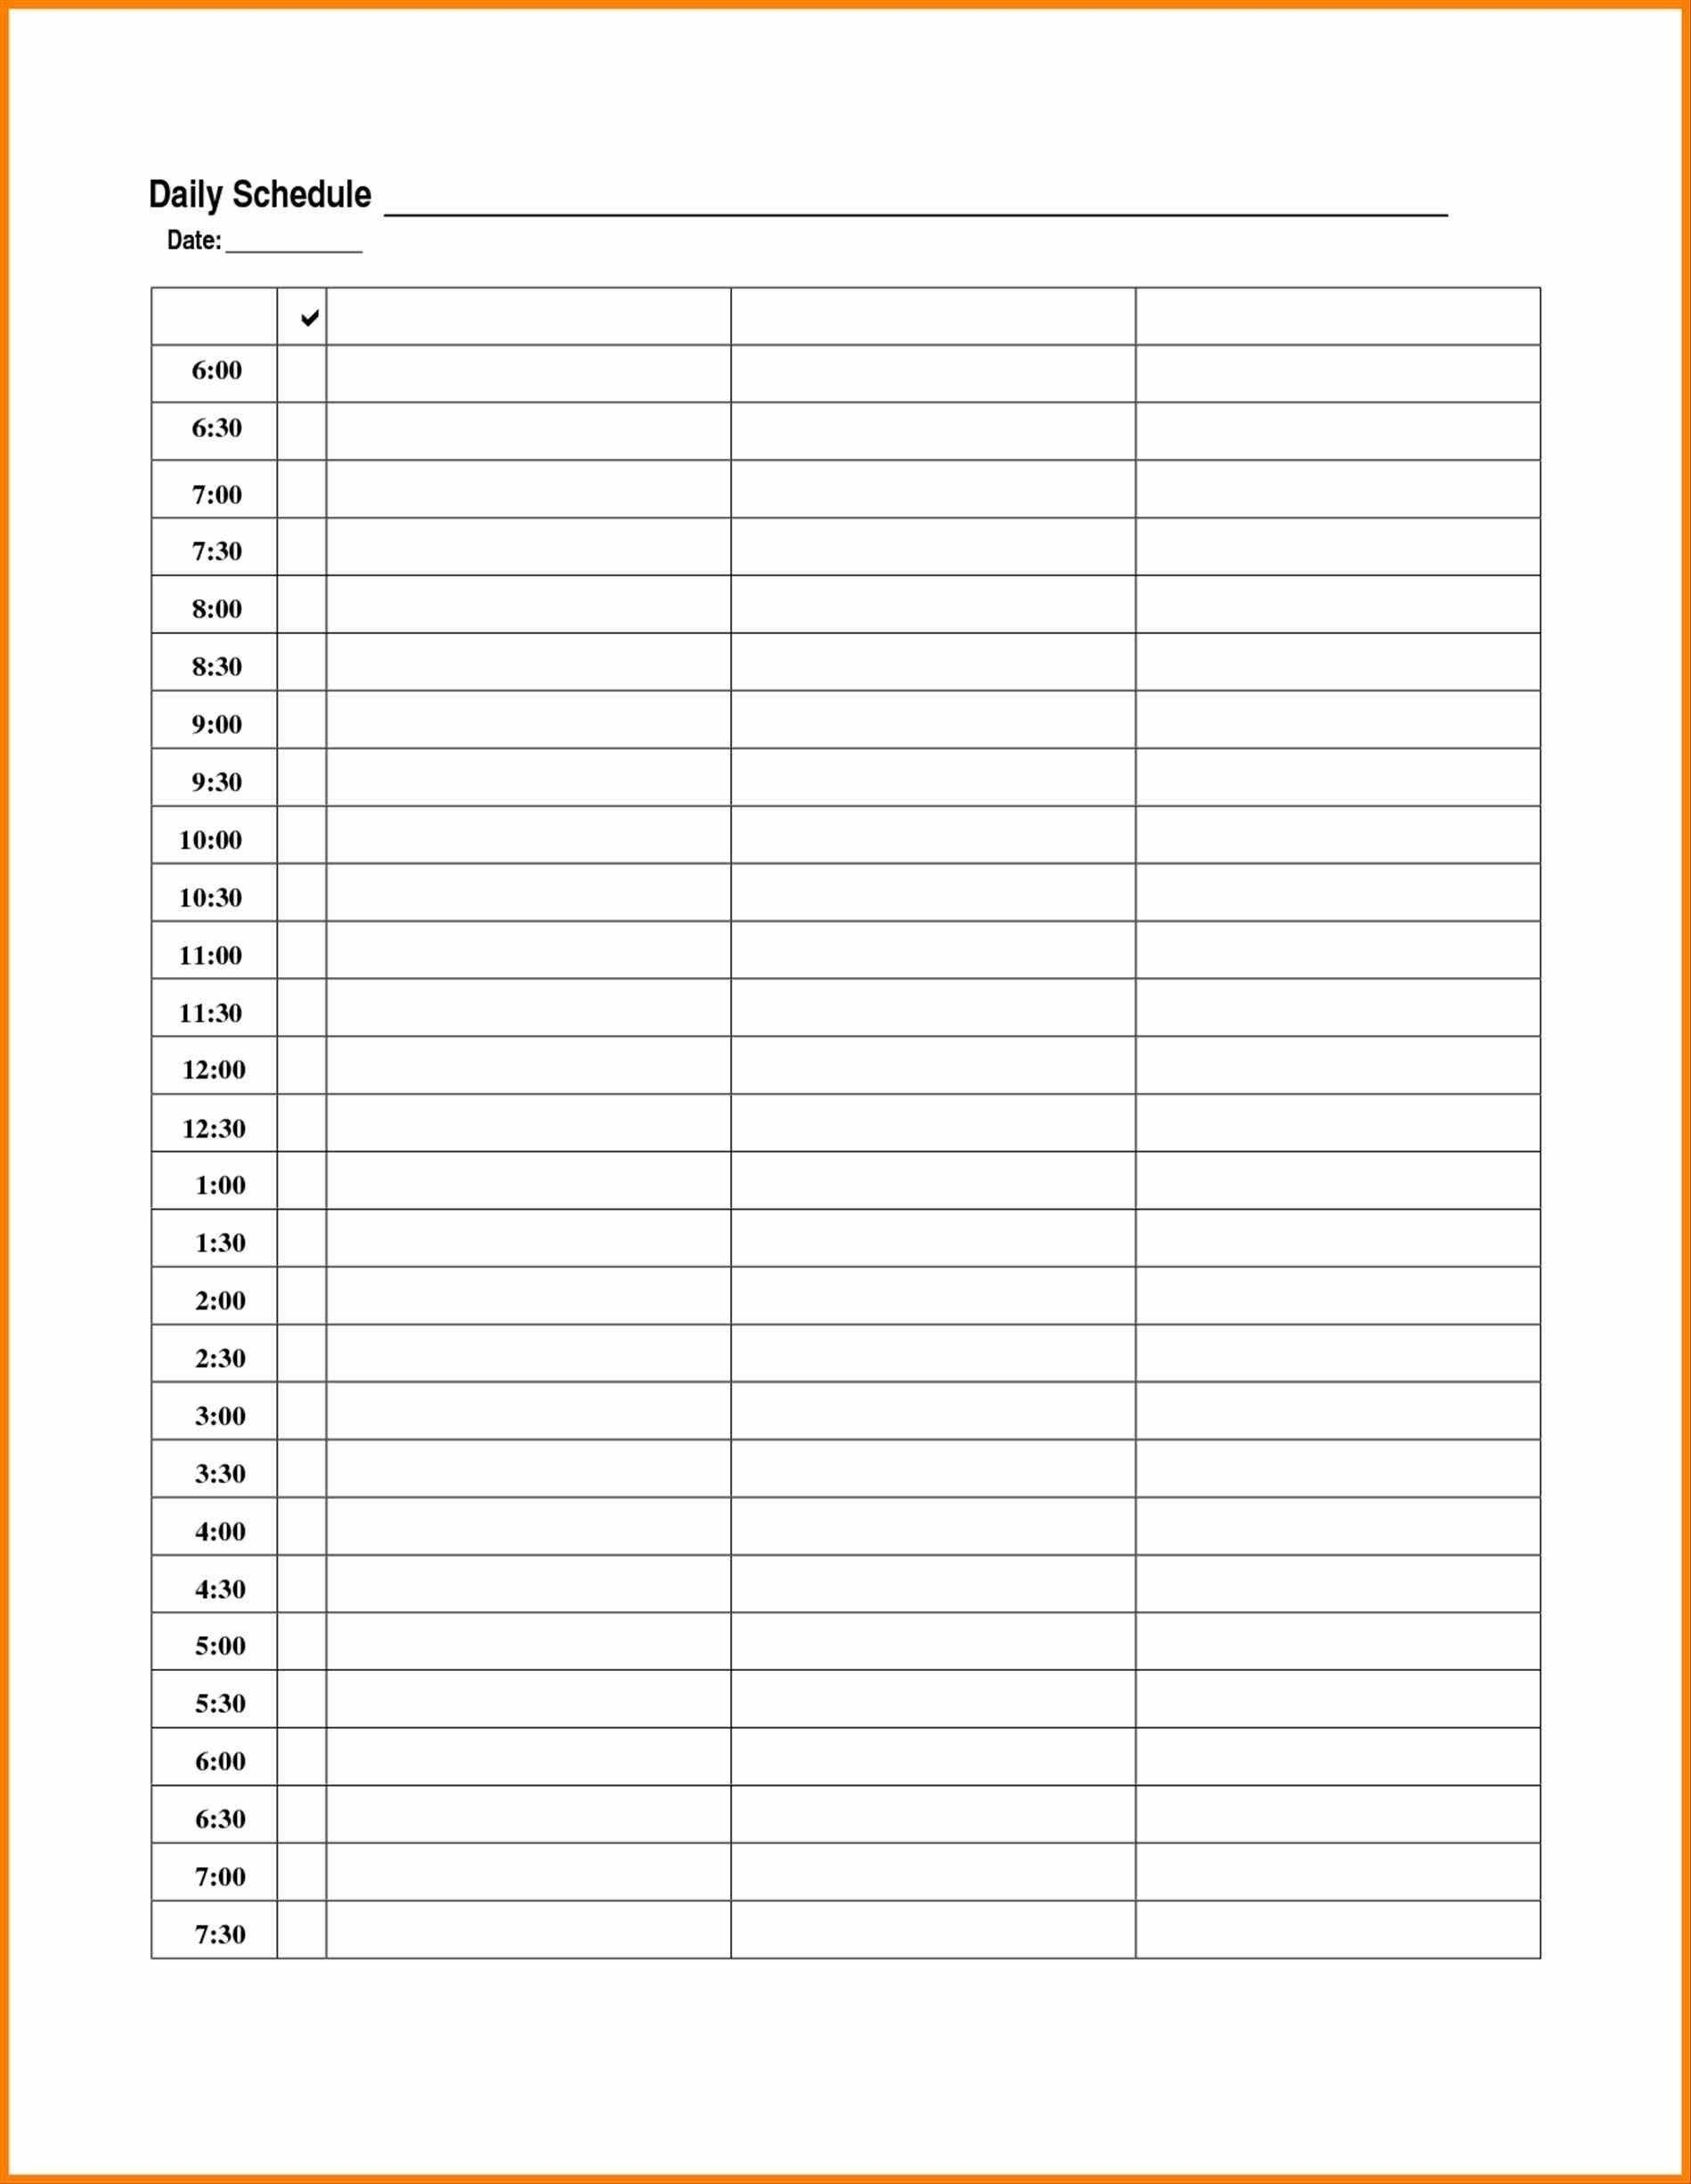 Daily Calendar Excel Template Free Printable | Monthly Calendar intended for Free Printable 30 Day Calendars